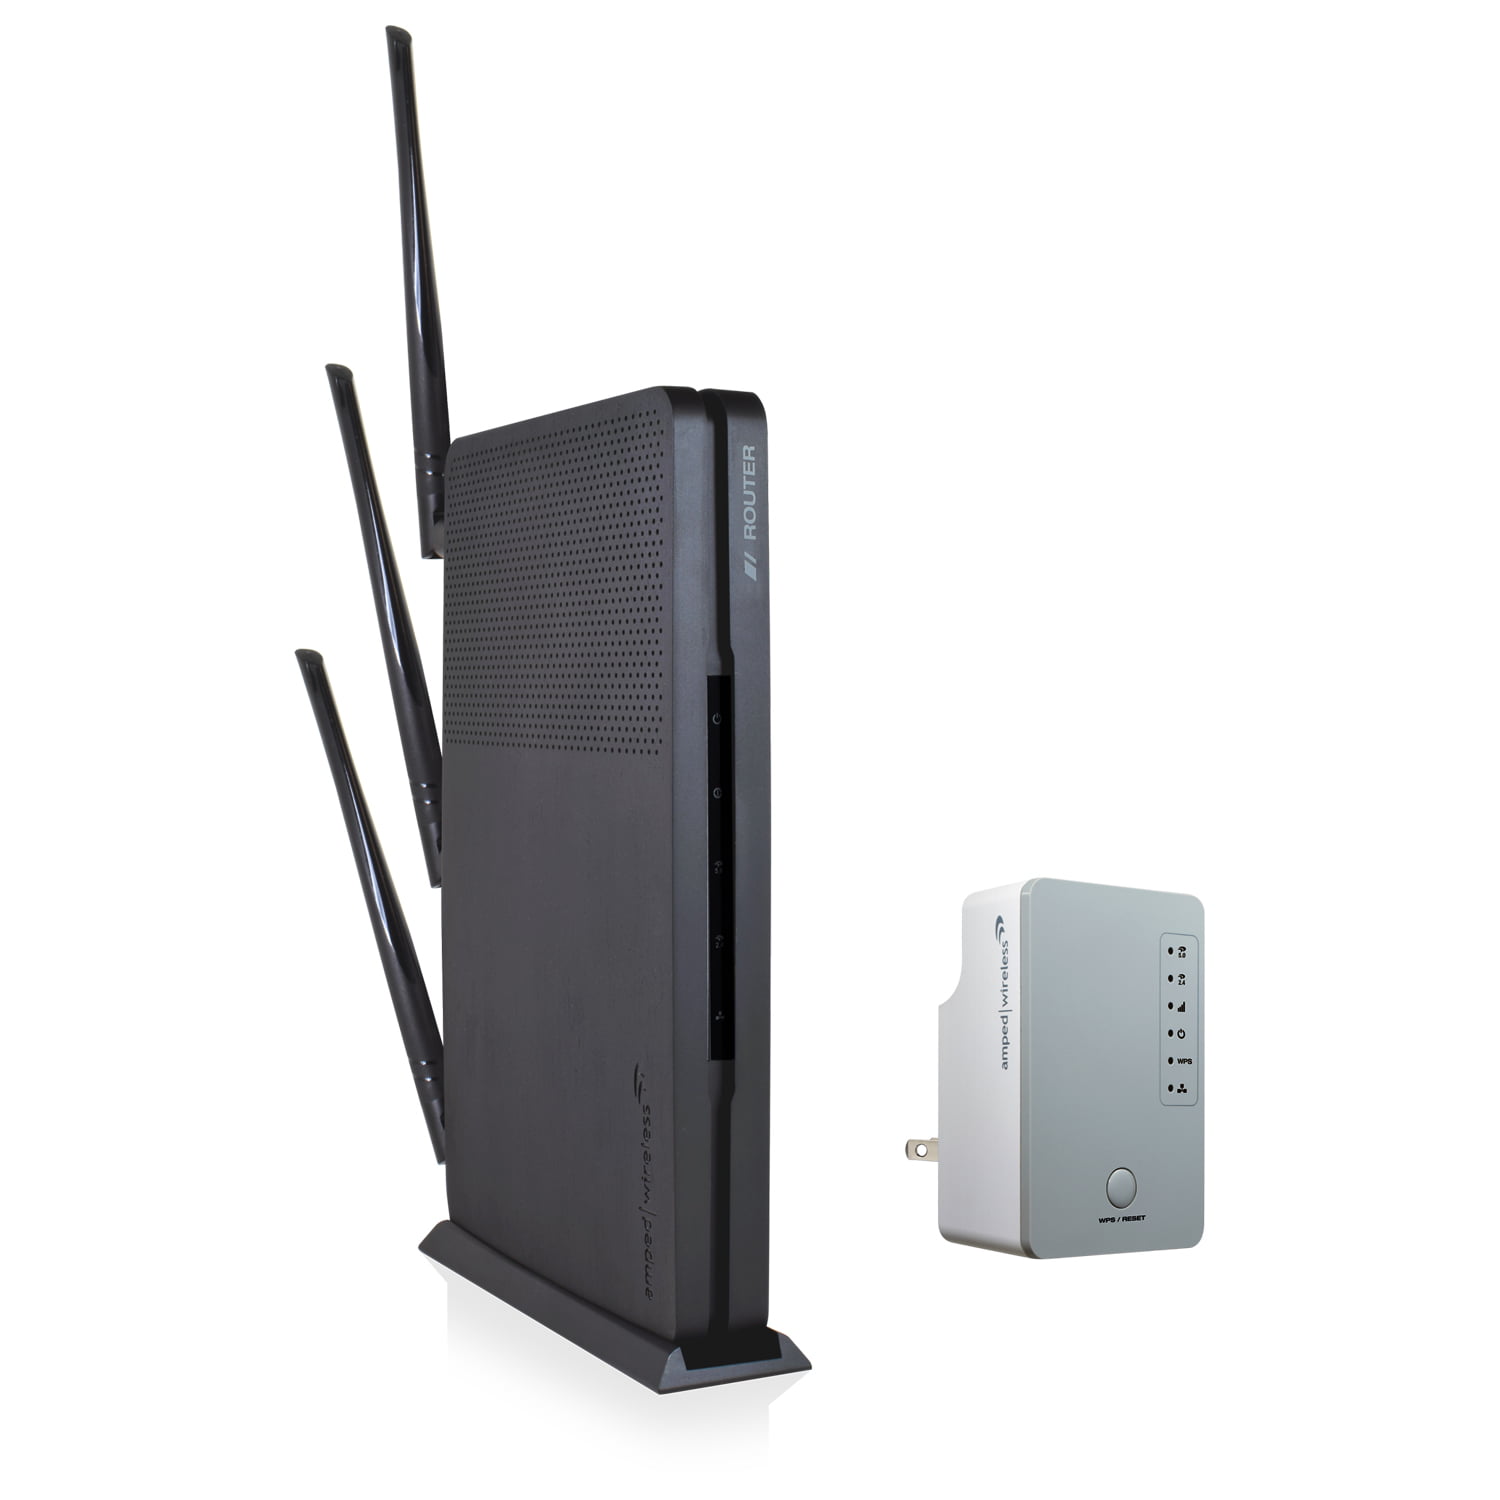 Lænestol gøre ondt stil Amped Wireless AC1900 WiFi Router and AC1200 Range Extender Bundle, B1912,  Gray/White - Walmart.com